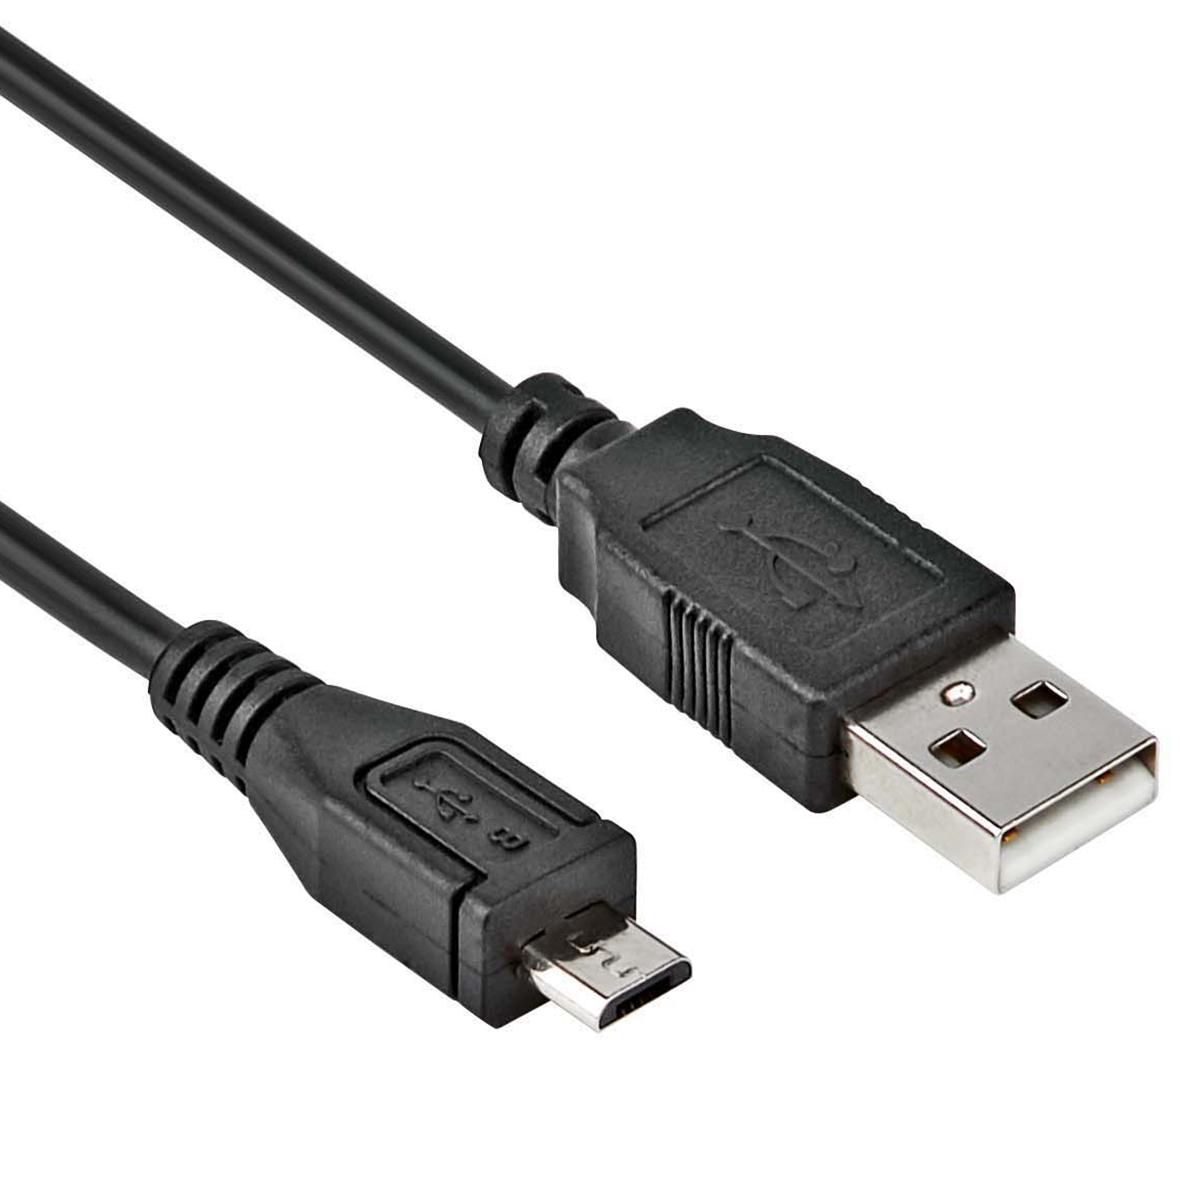 USB Micro B datakabel - 0.15 meter - Zwart - Allteq